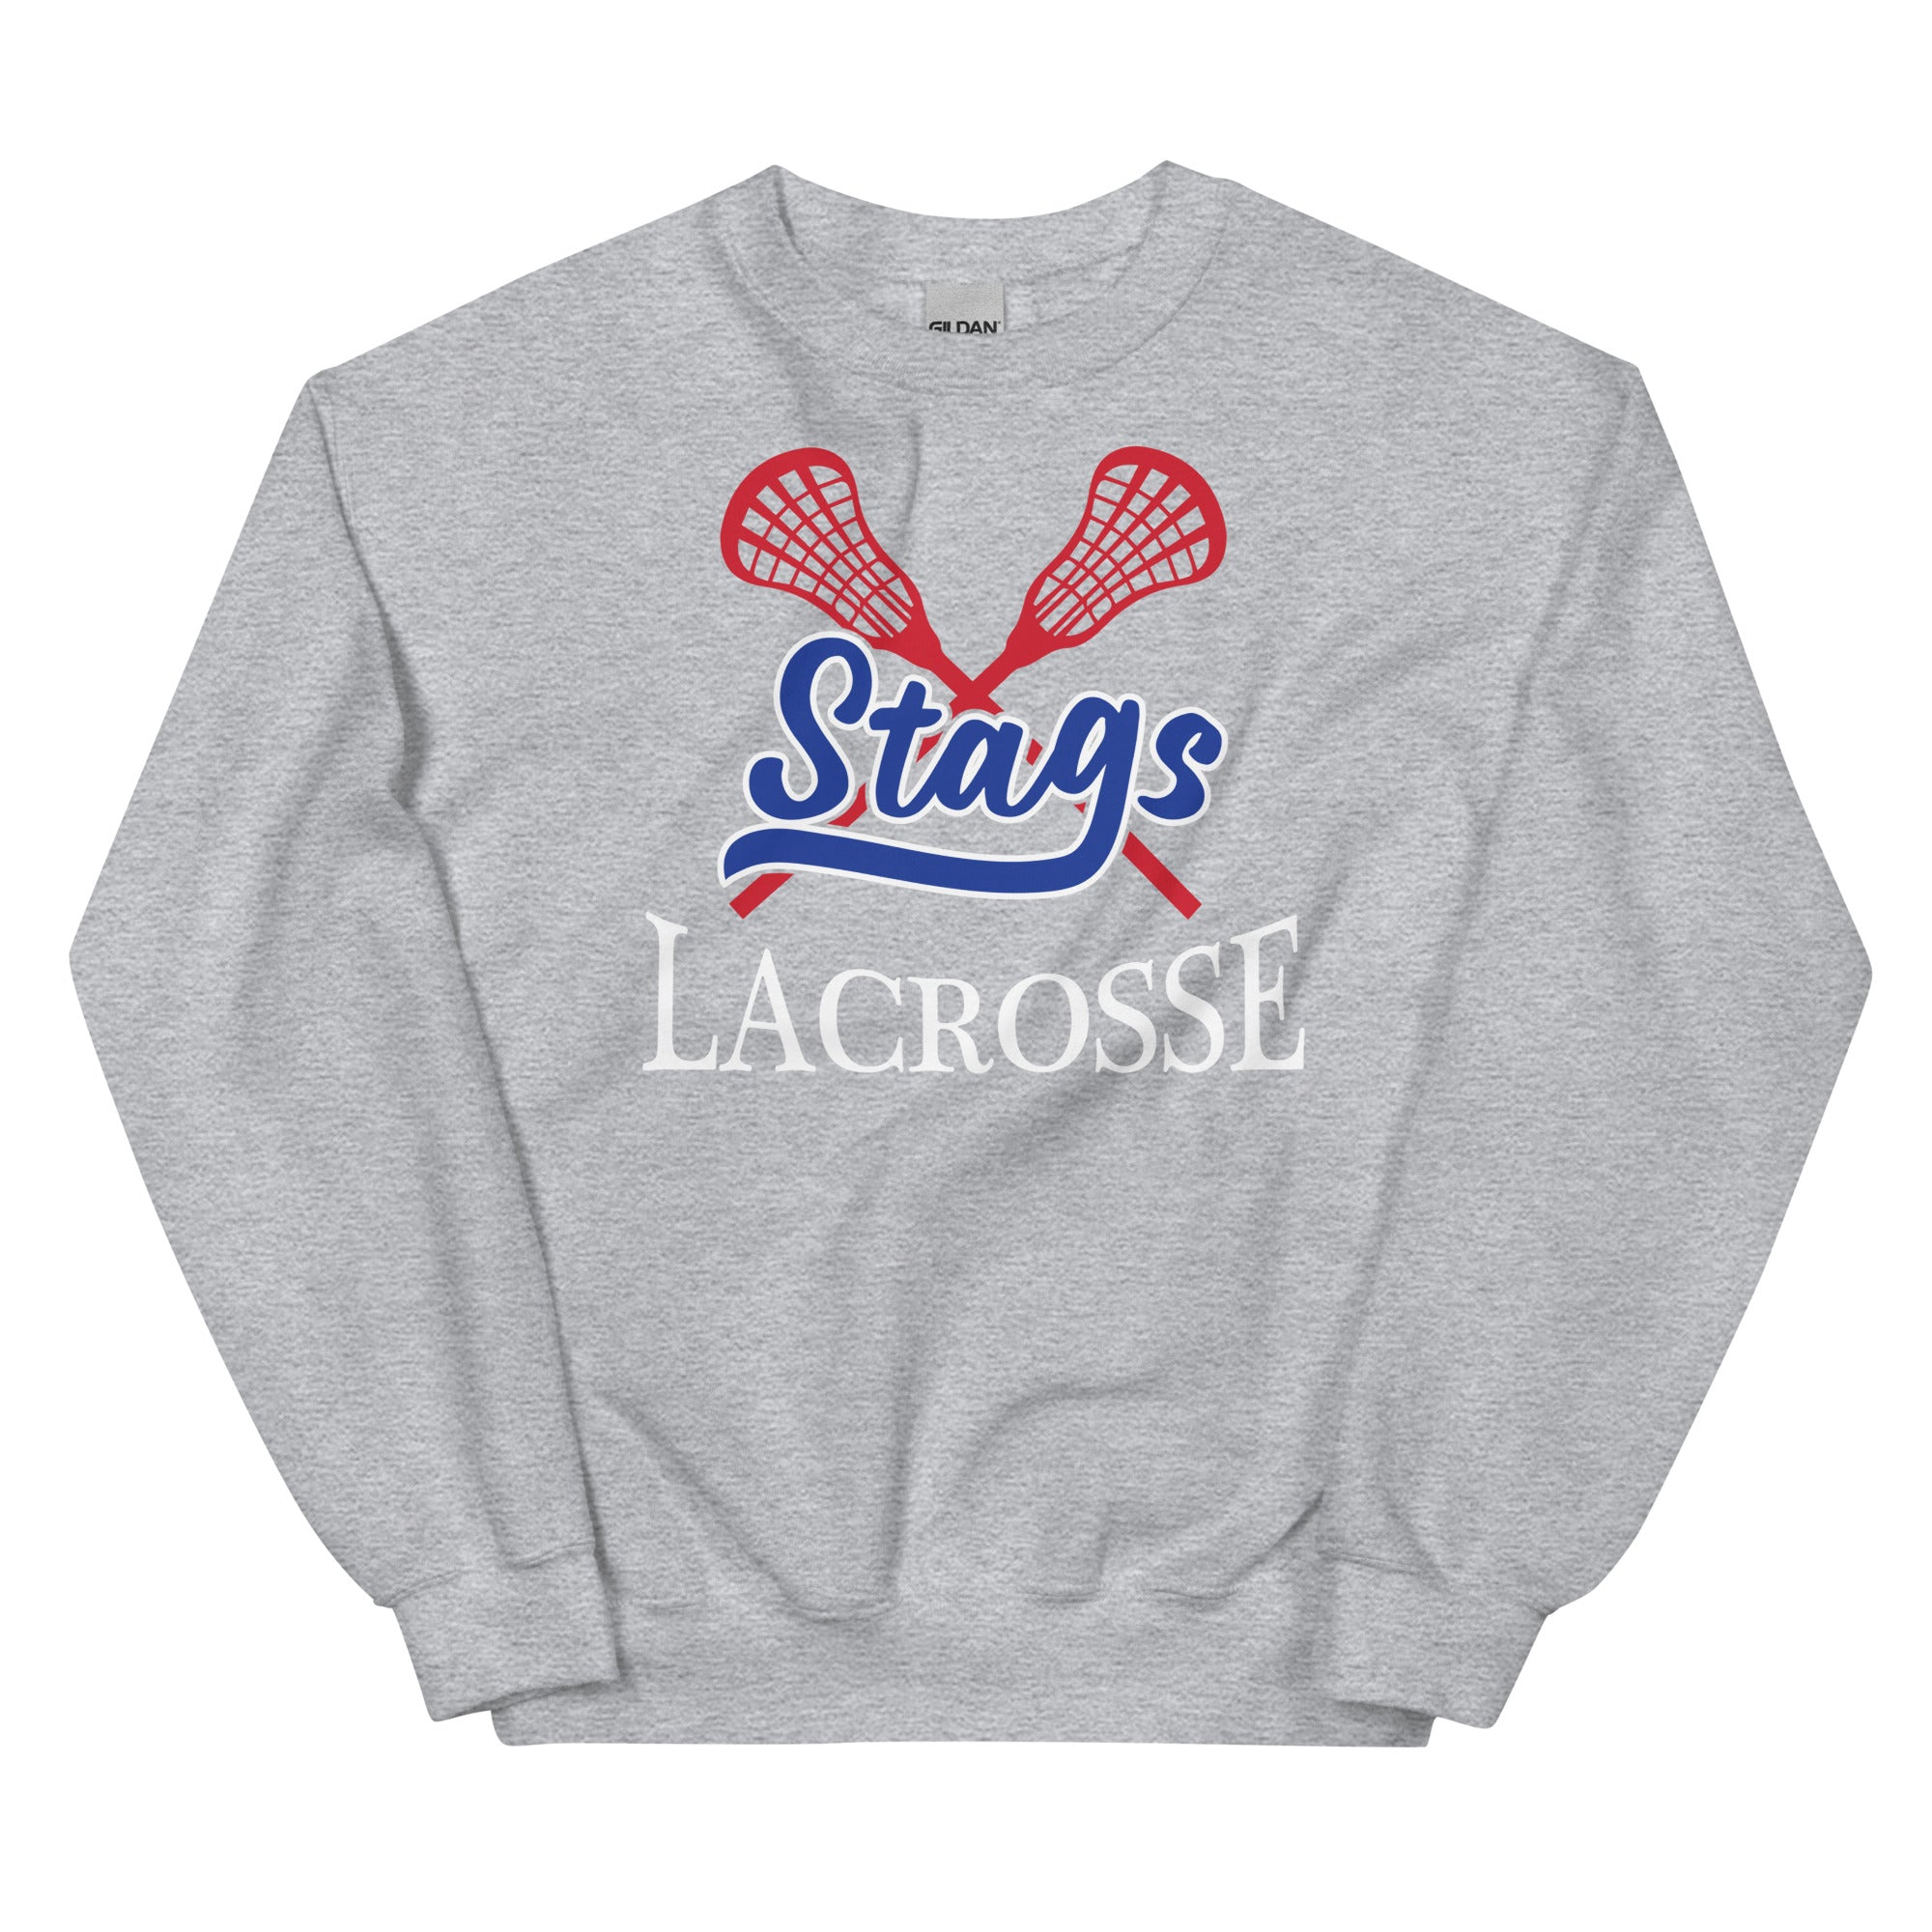 Stags Lacrosse Grey Unisex Crew Neck Sweatshirt